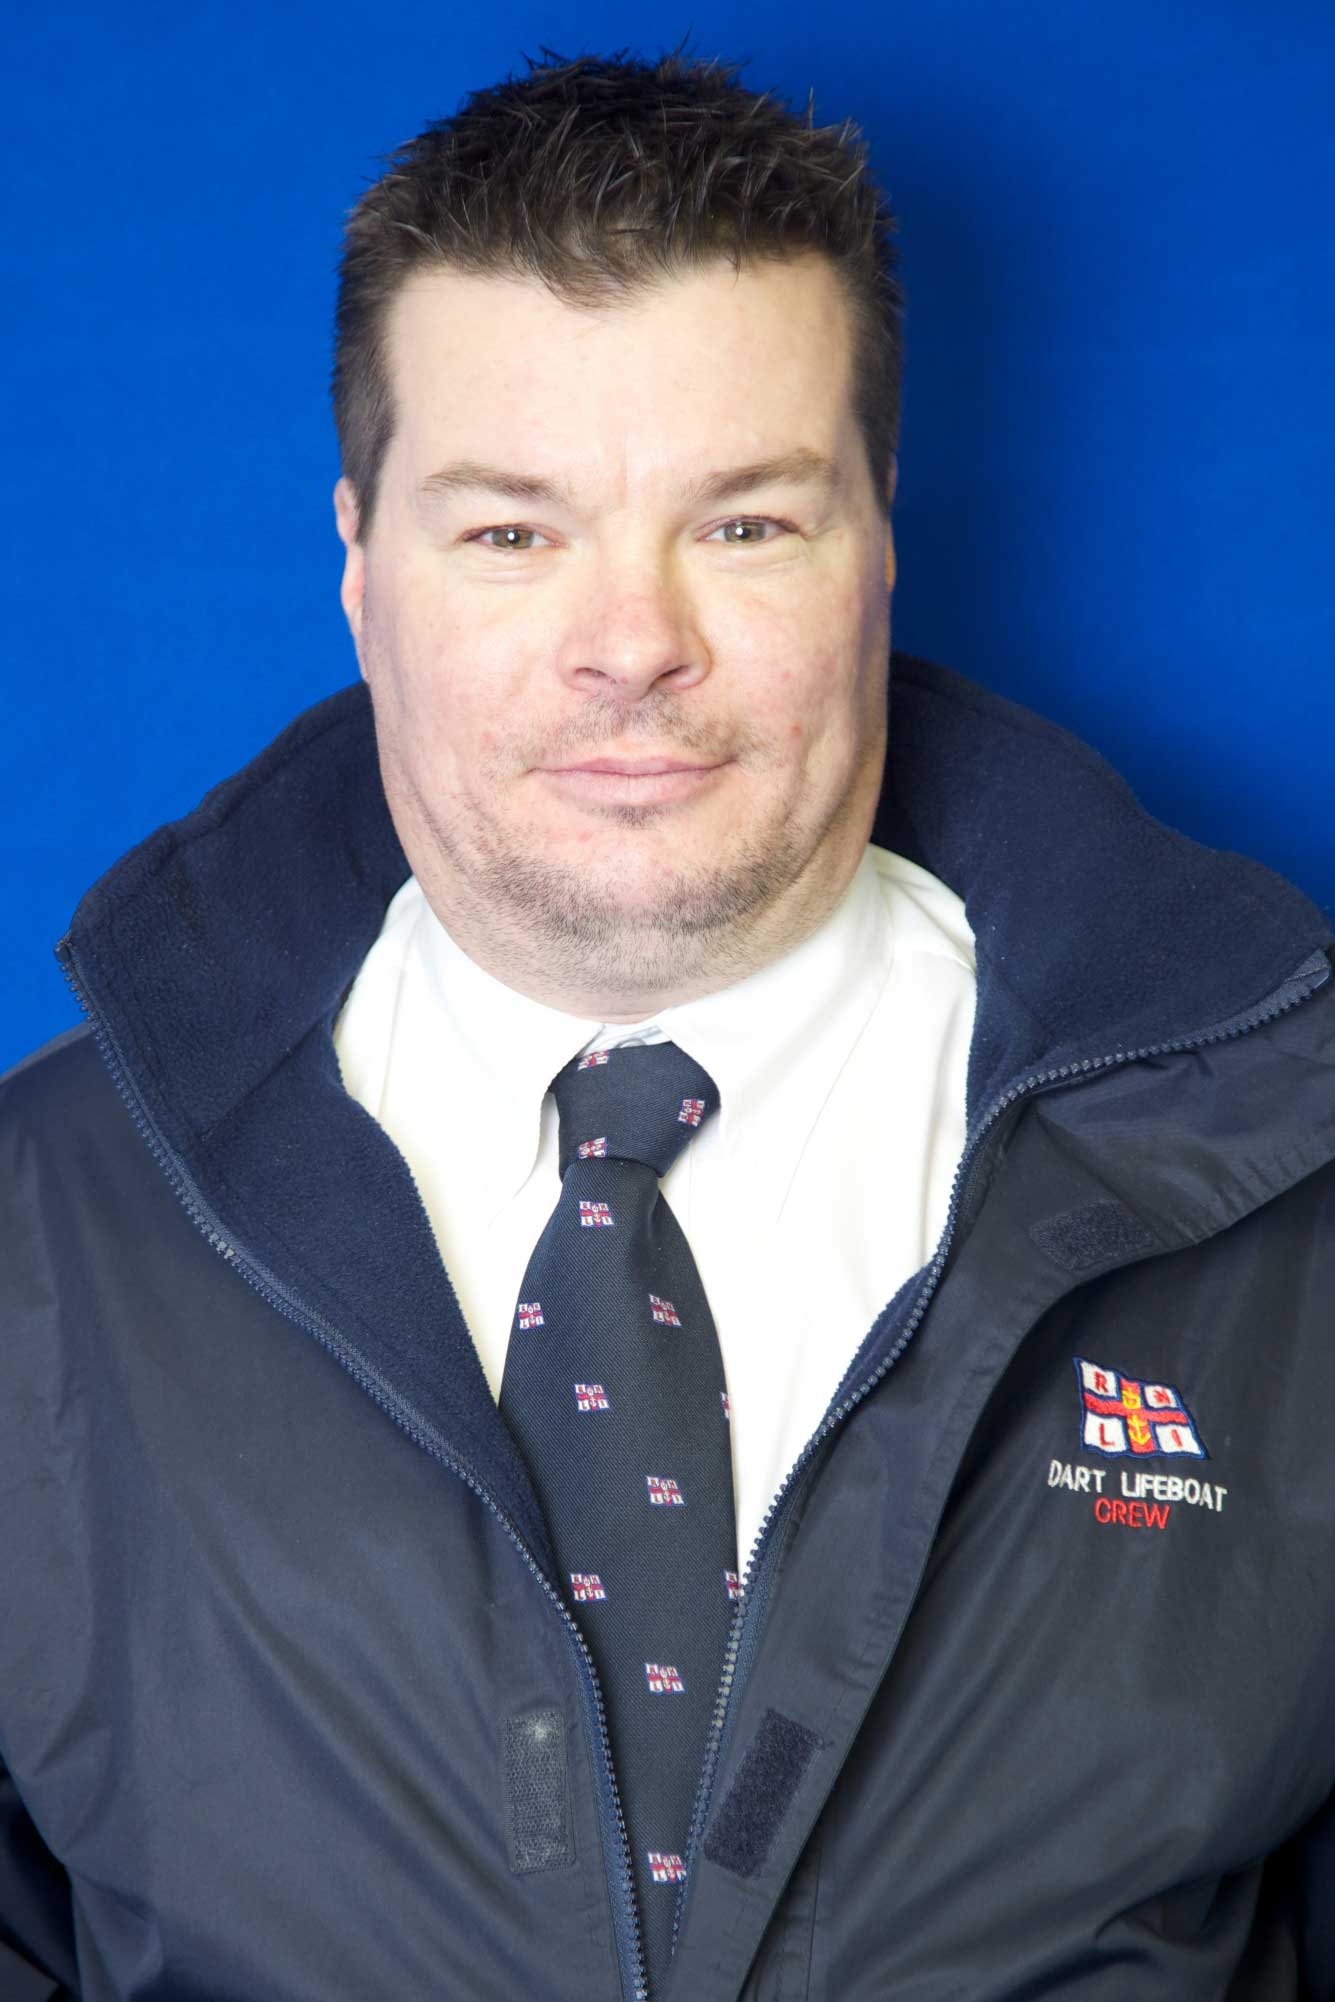 Chris Wallace, Operations Team, RNLI Dart